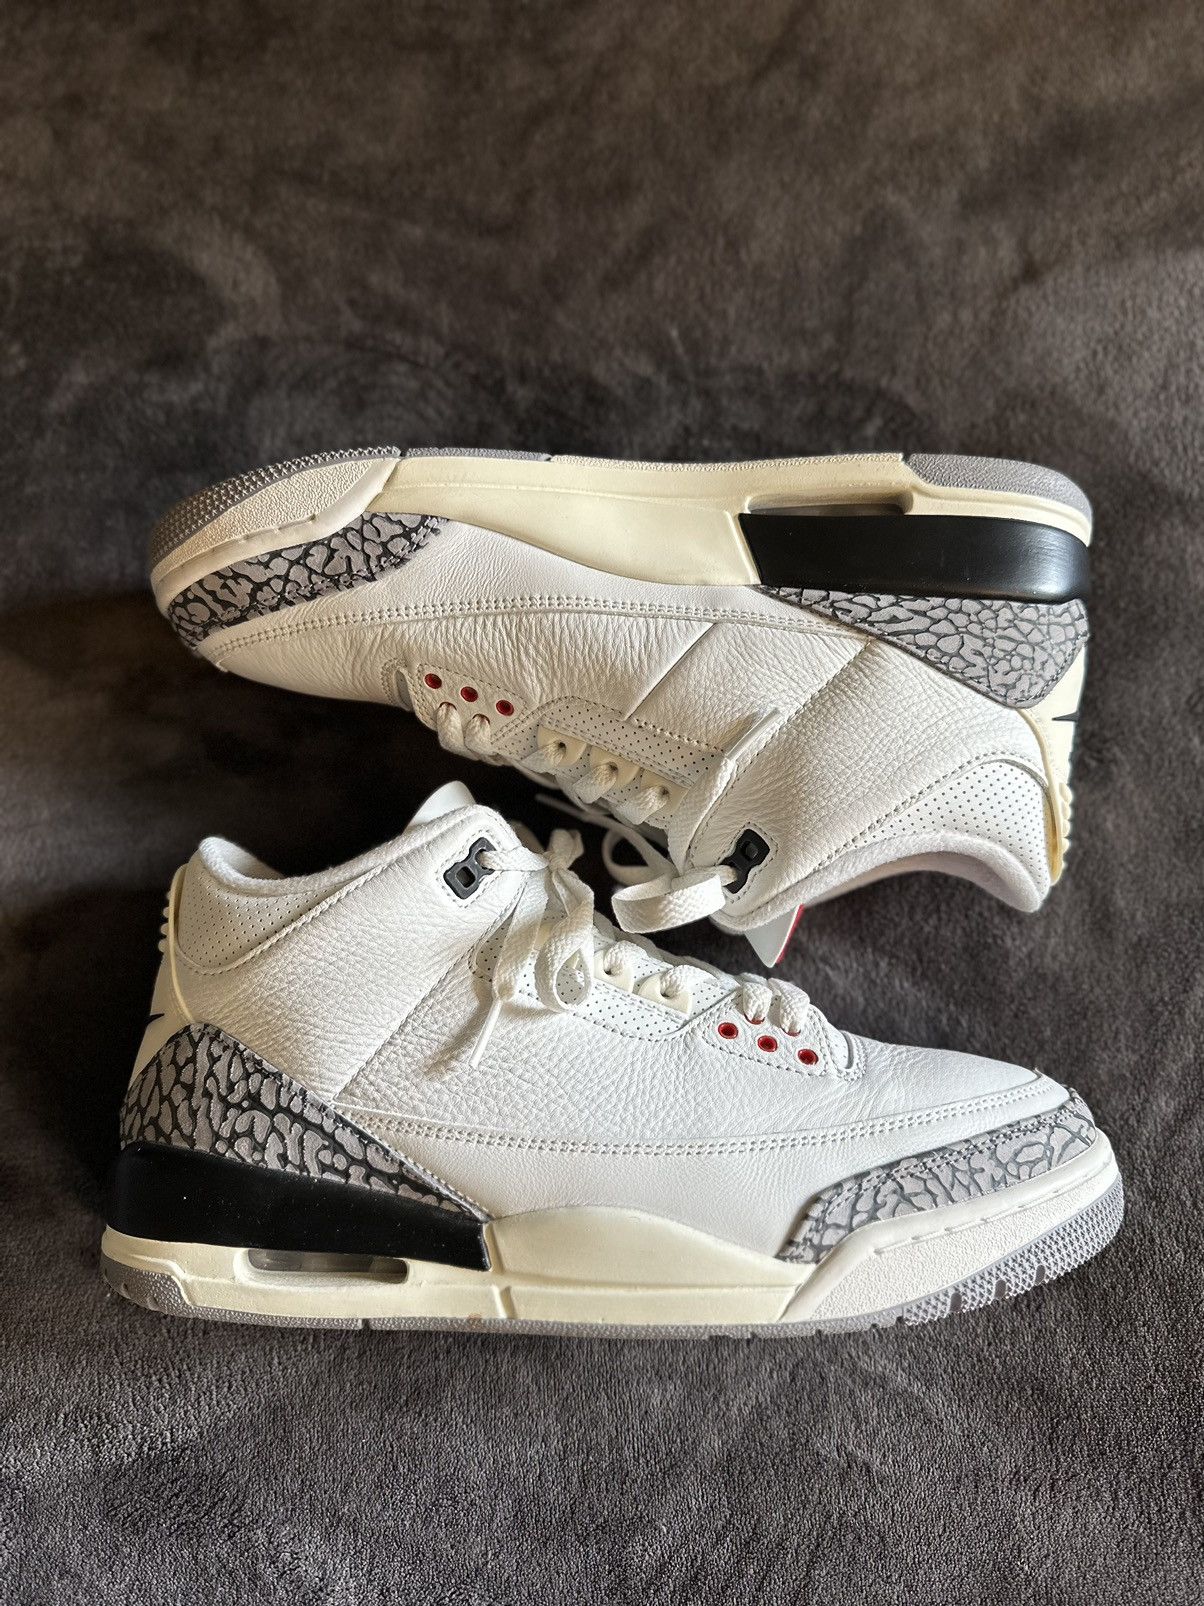 Pre-owned Jordan Nike Jordan 3 Retro White Cement Reimagined Size 10 Shoes